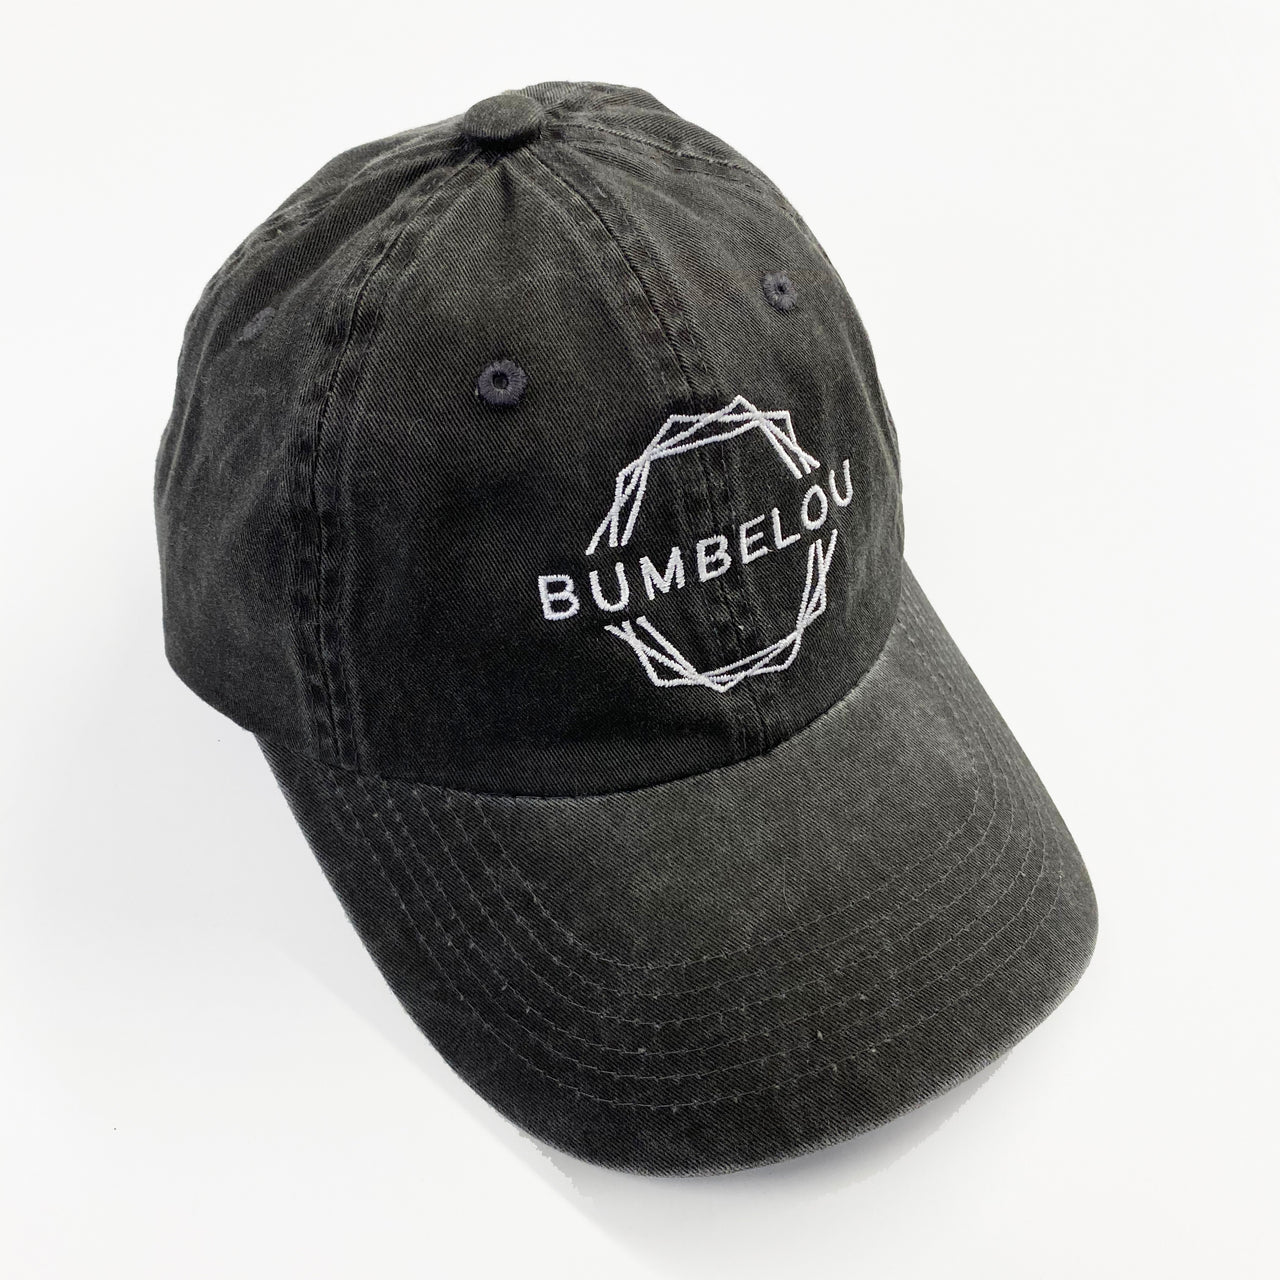 Bumbelou Hat